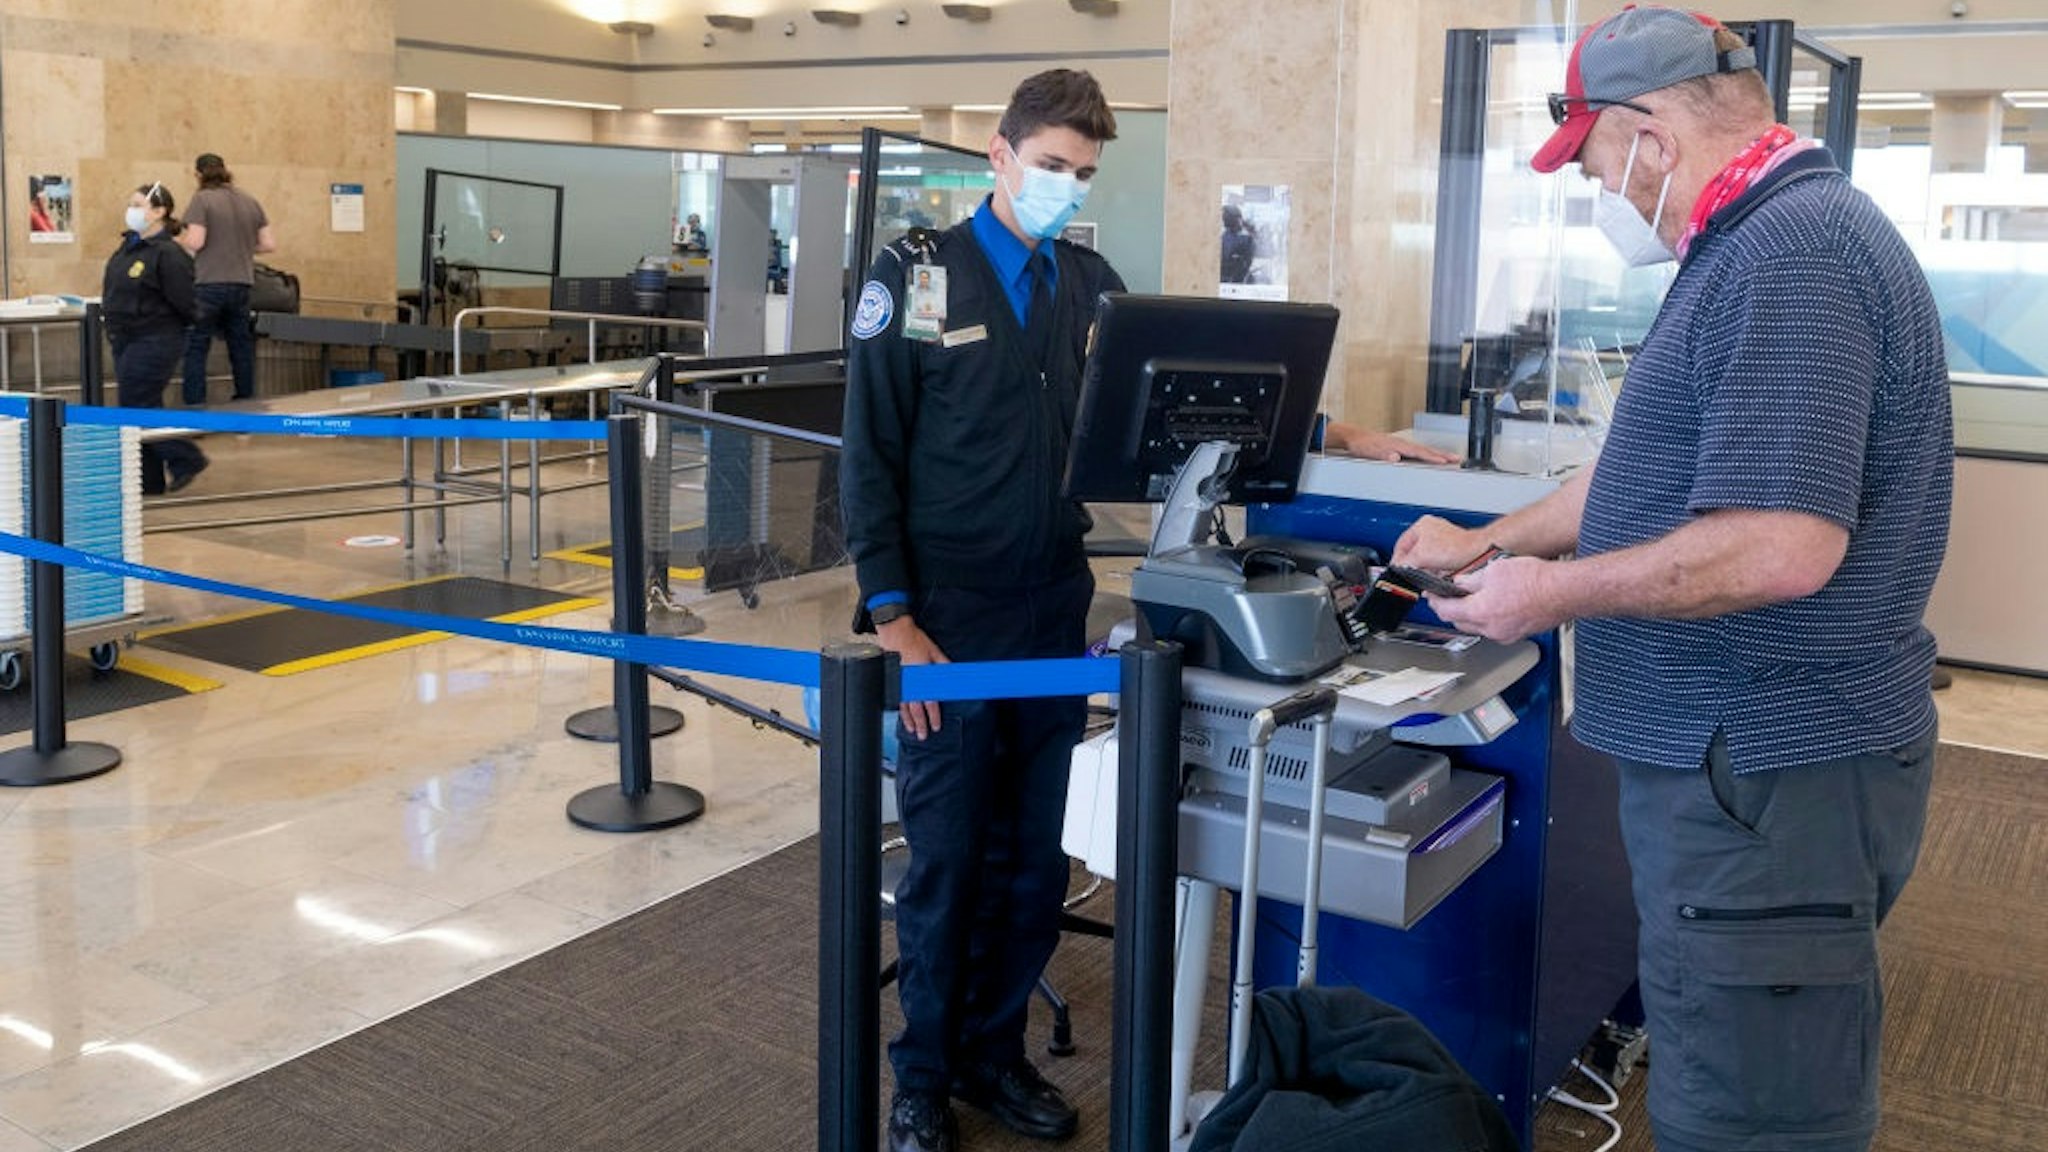 SANTA ANA, CA - JANUARY 26: A TSA agent helps a man through a security checkpoint at John Wayne Airport in Santa Ana, CA on Tuesday, January 26, 2021.